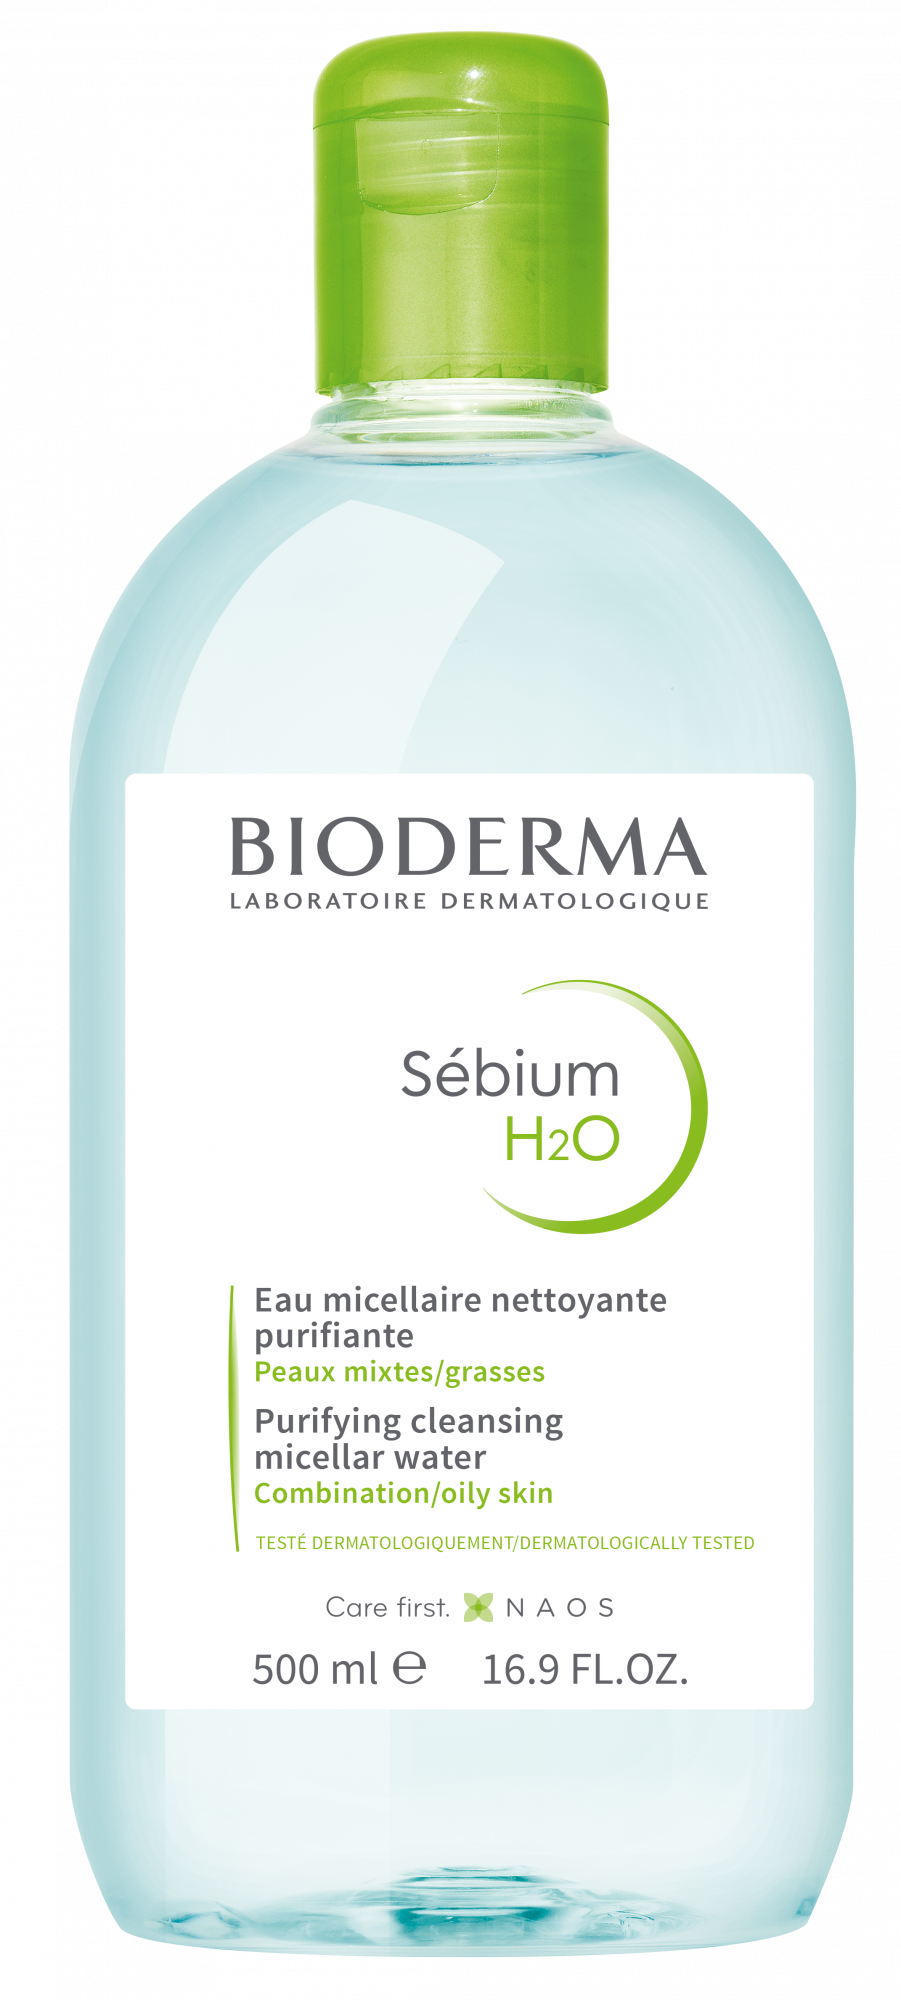 Bioderma - Sébium H20 Solution micellaire nettoyante purifiante (250 ml)